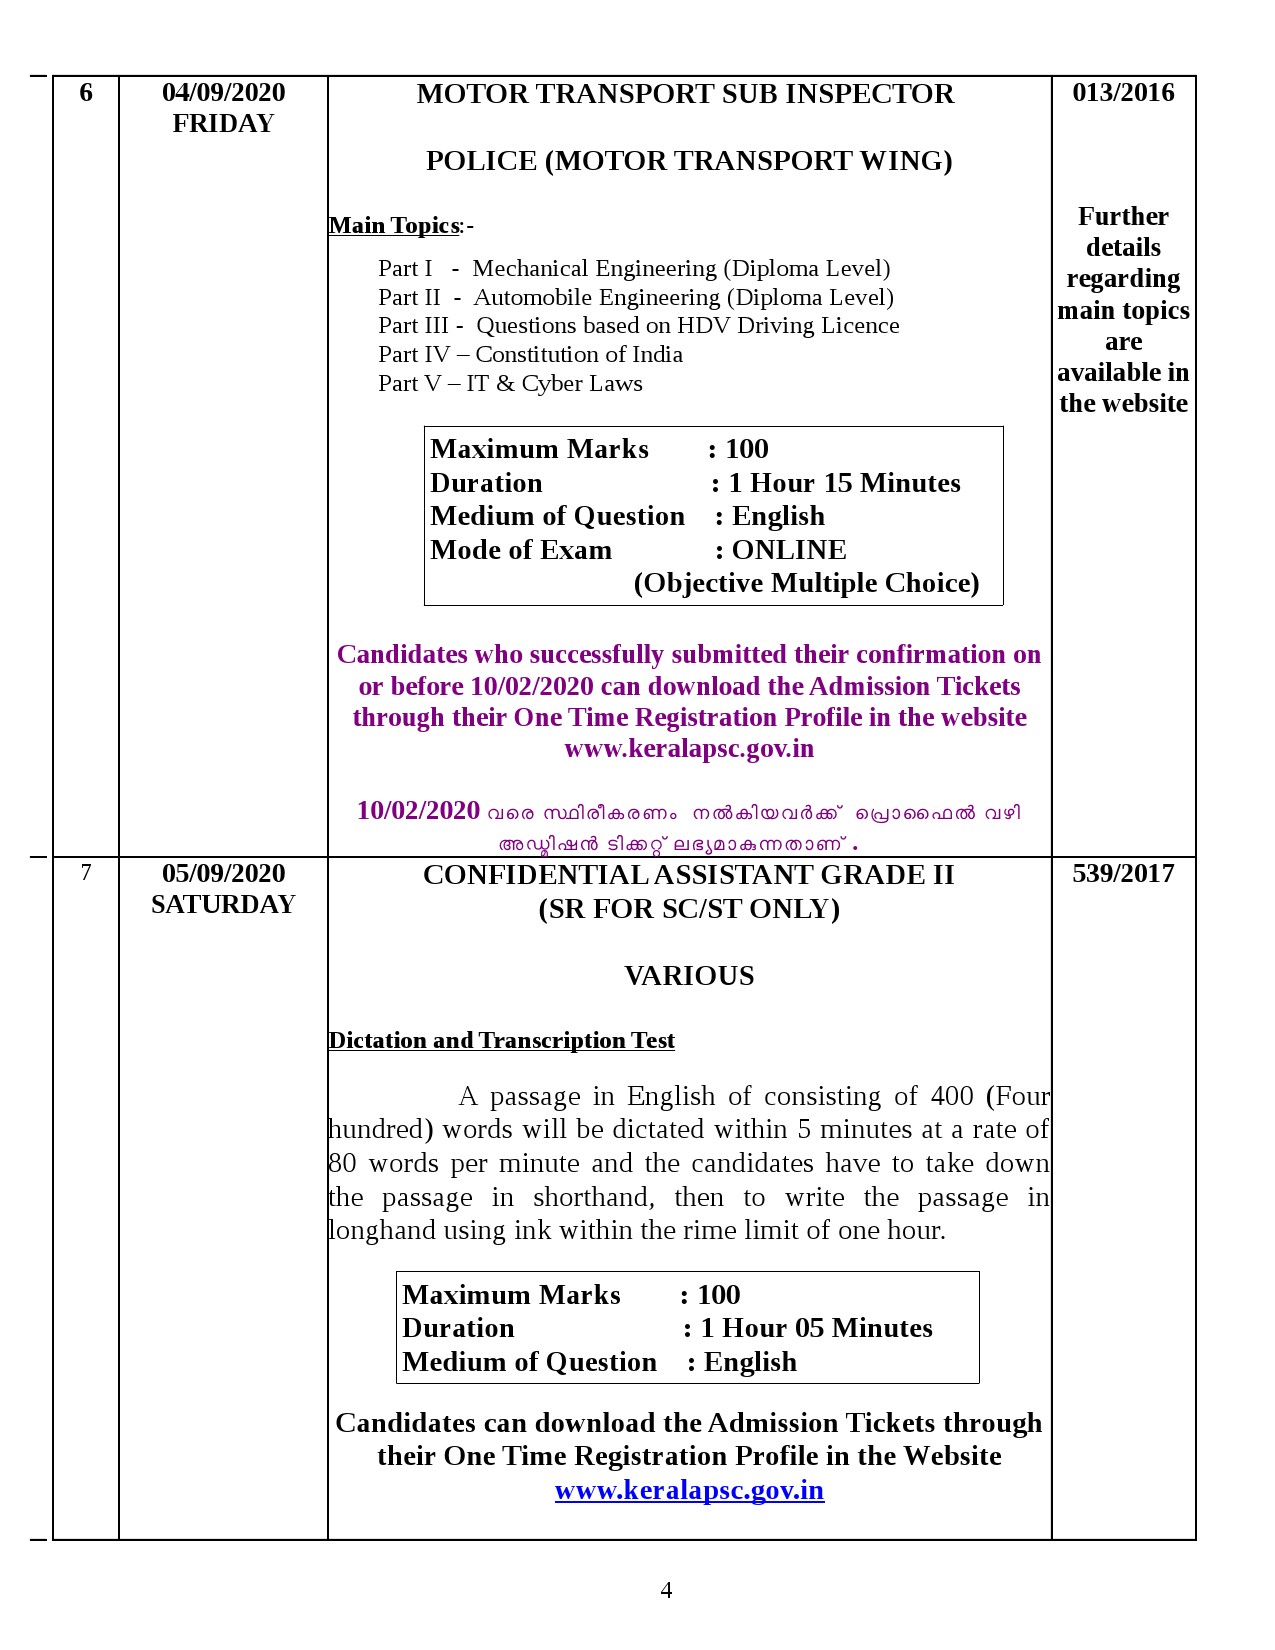 Kerala PSC Exam Calendar September 2020 - Notification Image 4